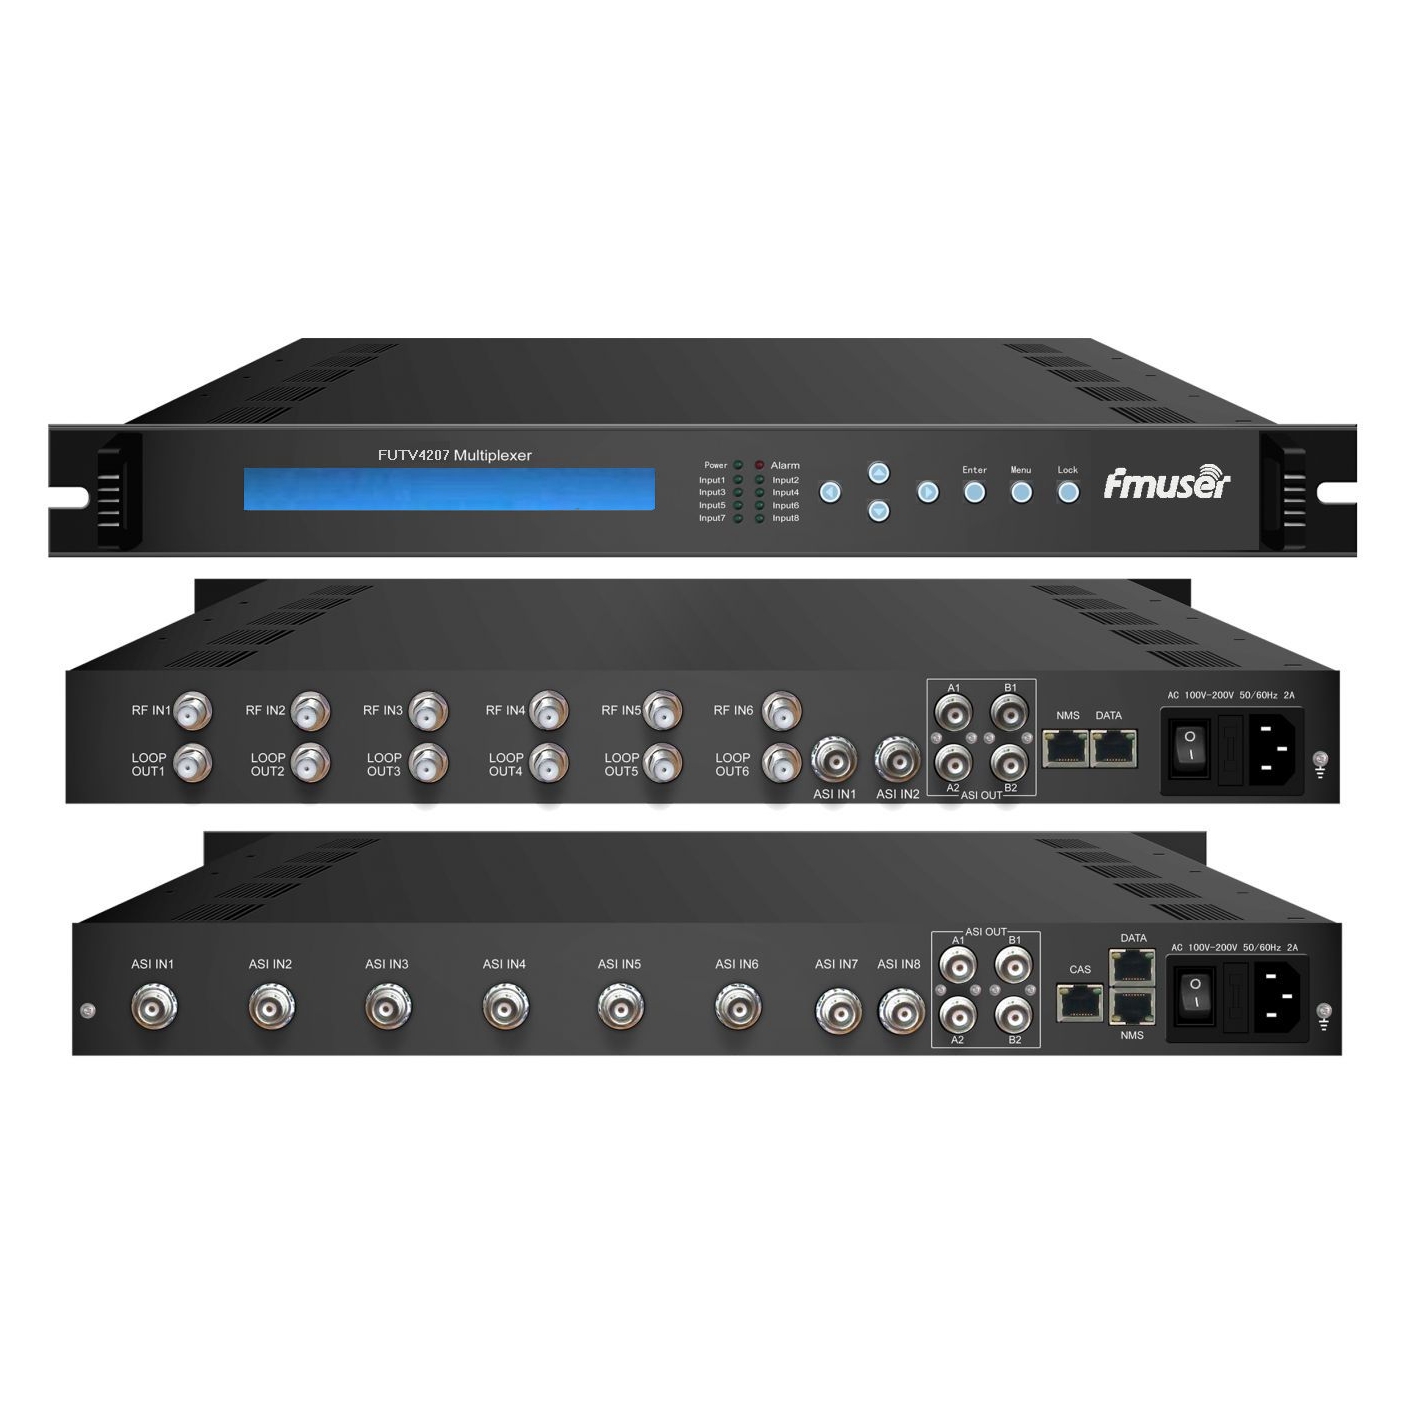 FMUSER FUTV4207X系列6调谐器IRD（2 ASI + 6 DVB-C / DVB-S / DVB-S2 / DVB-T / ISDB / ATSC 8VSB RF输入，8 ASI输入，2 ASI IP输出）多路复用器